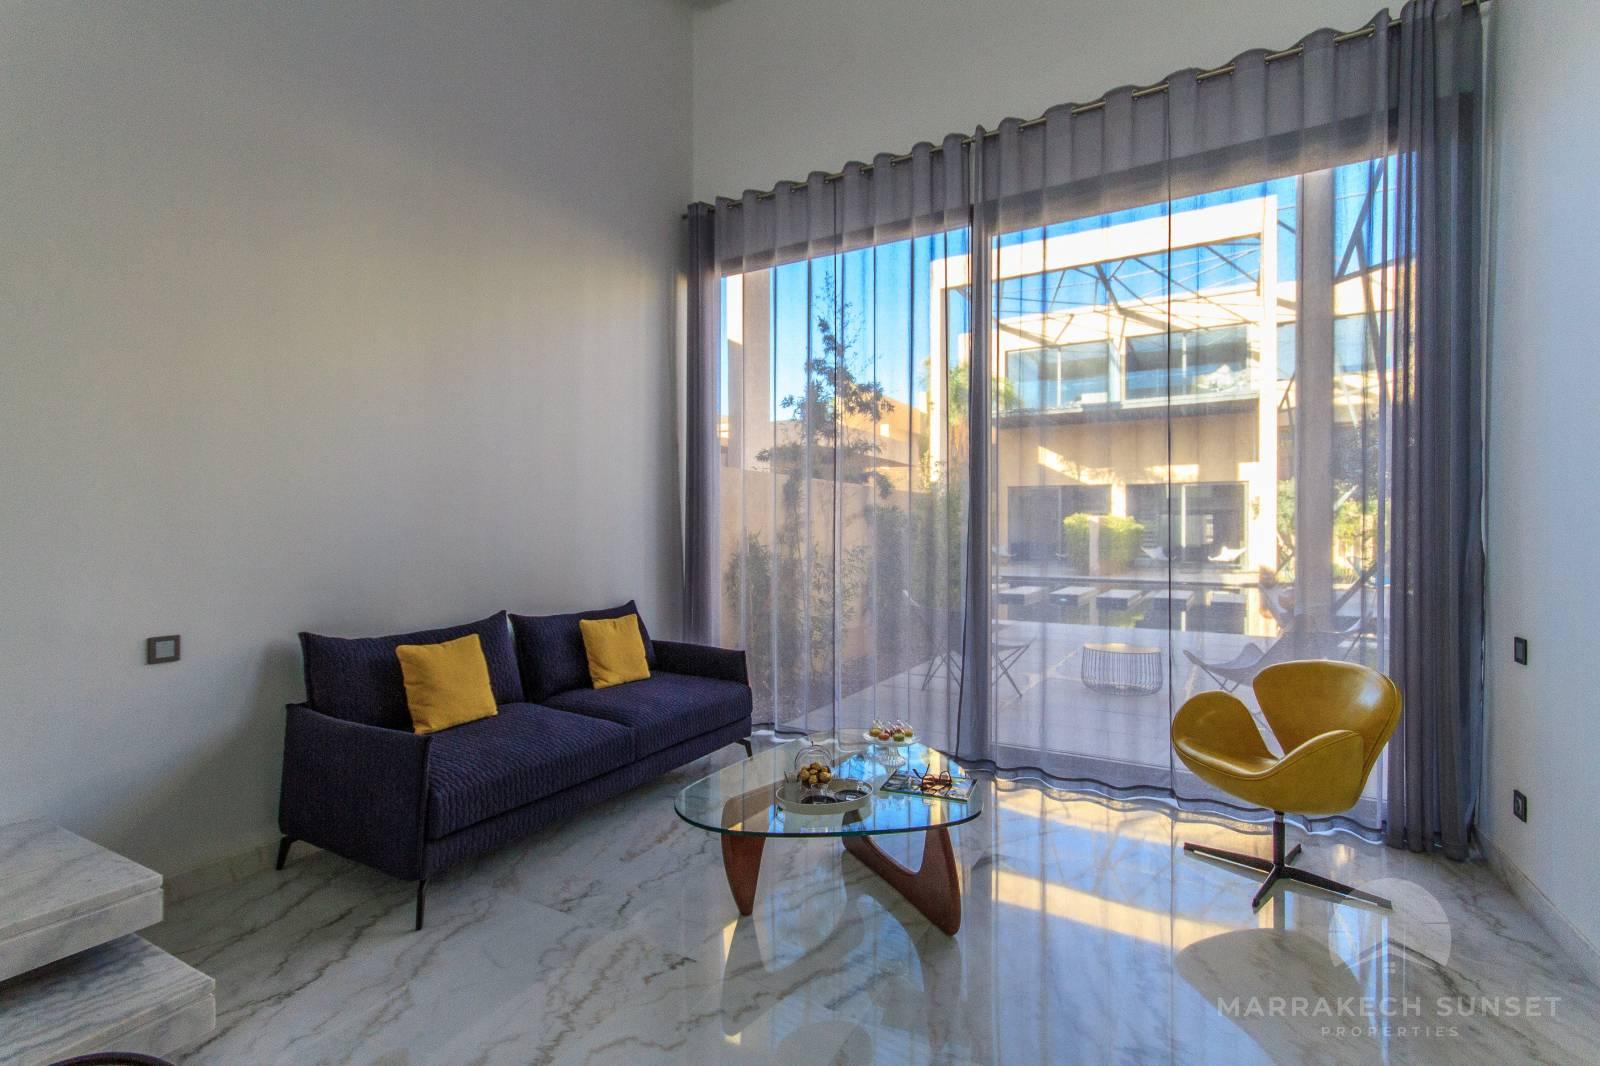  Luxury 1 bedroom Loft apartment for sale in Marrakech 